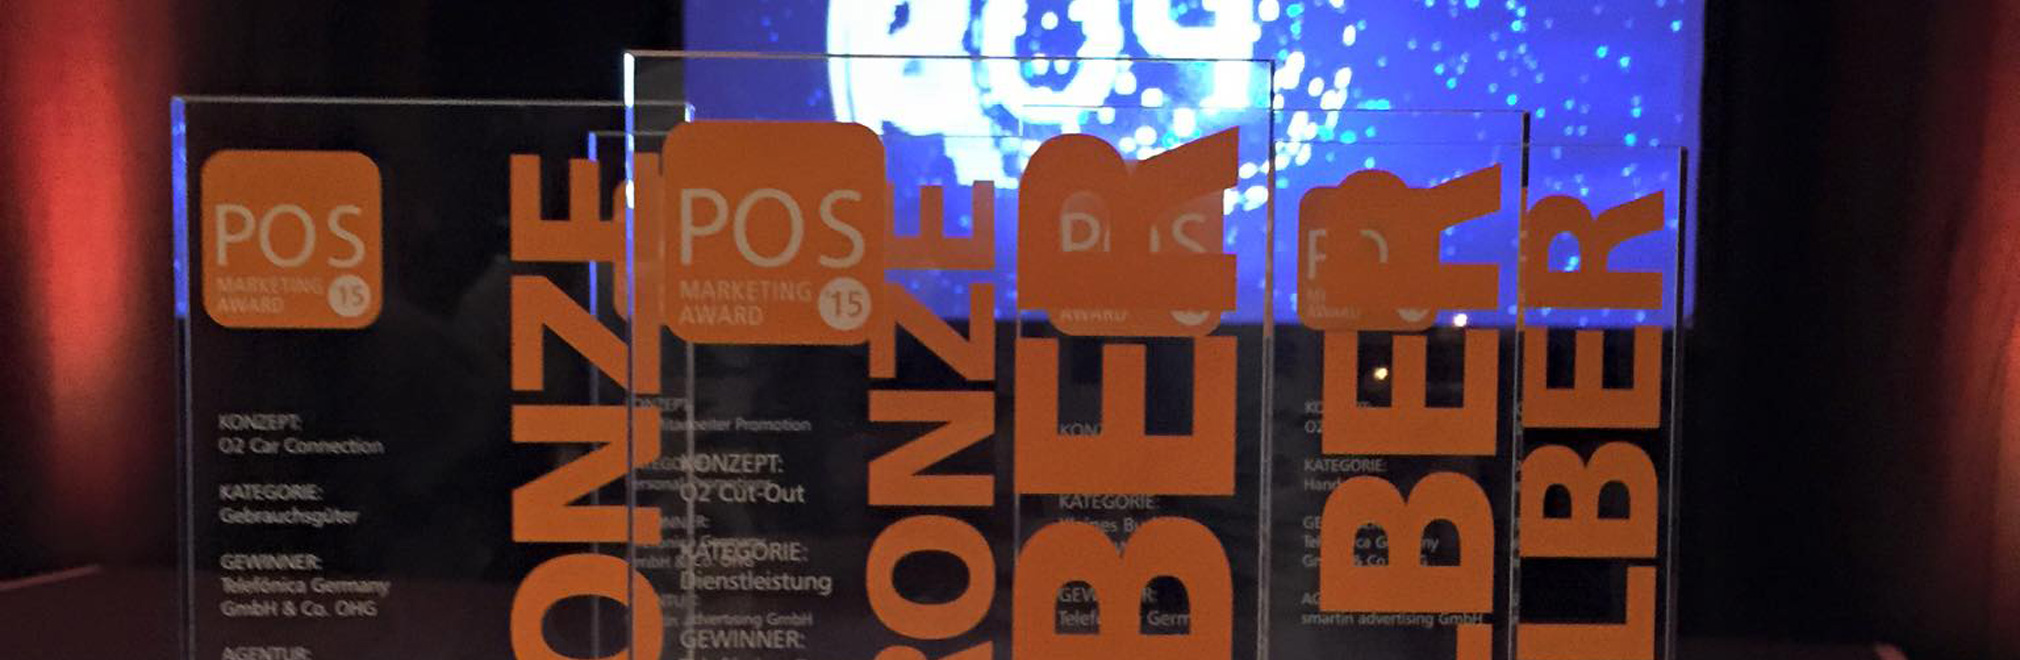 Feierstimmung beim POS Marketing Award 2015